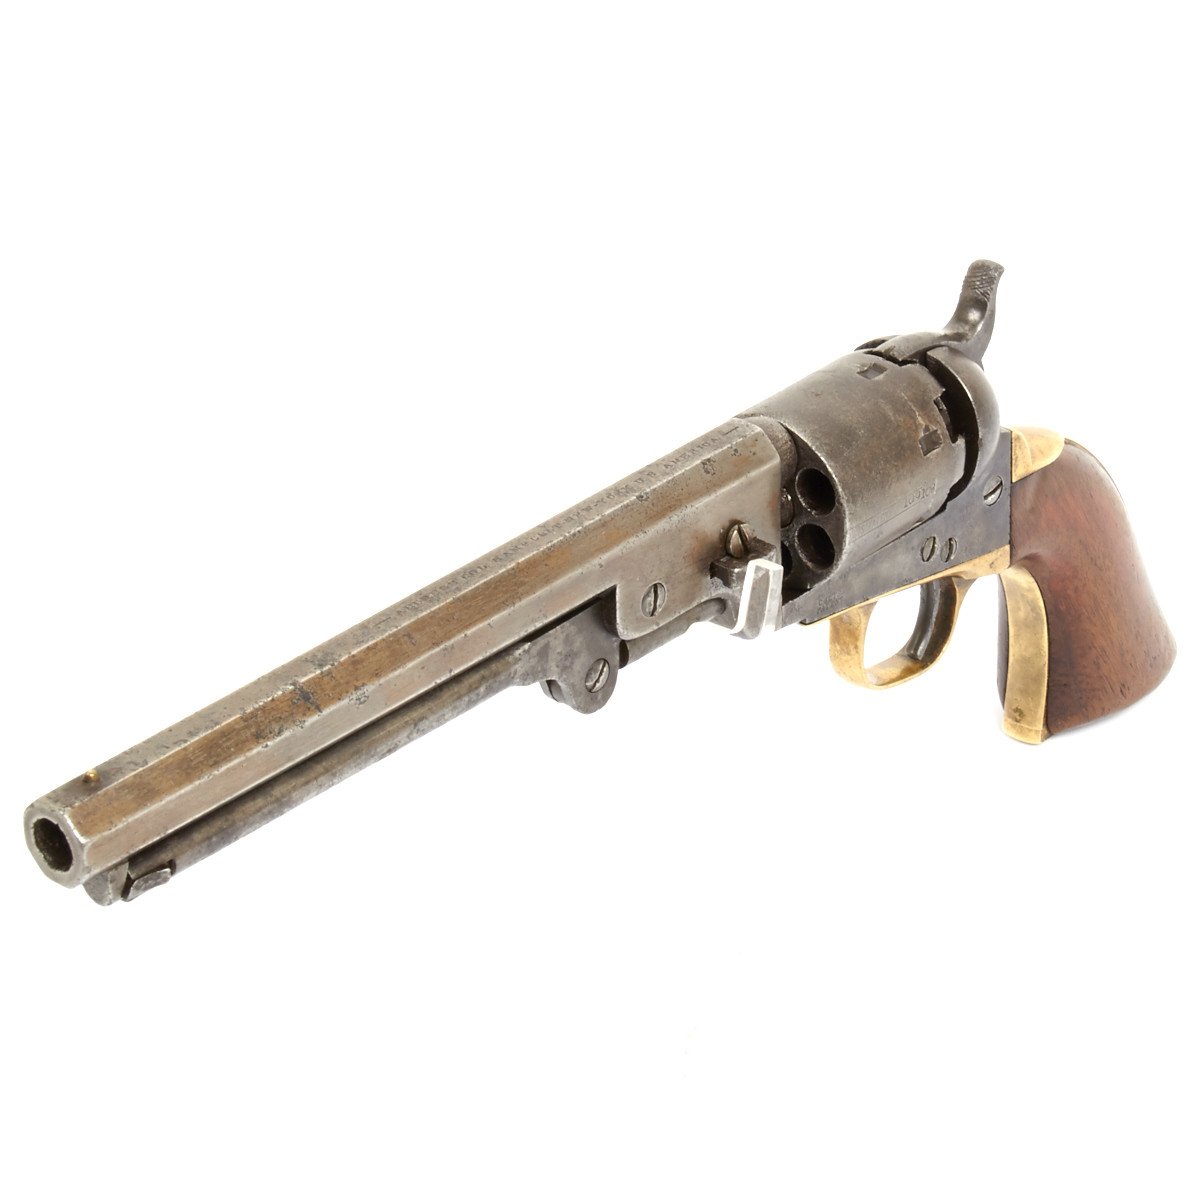 1851 Colt Navy Revolver - Fort Smith National Historic Site (U.S.